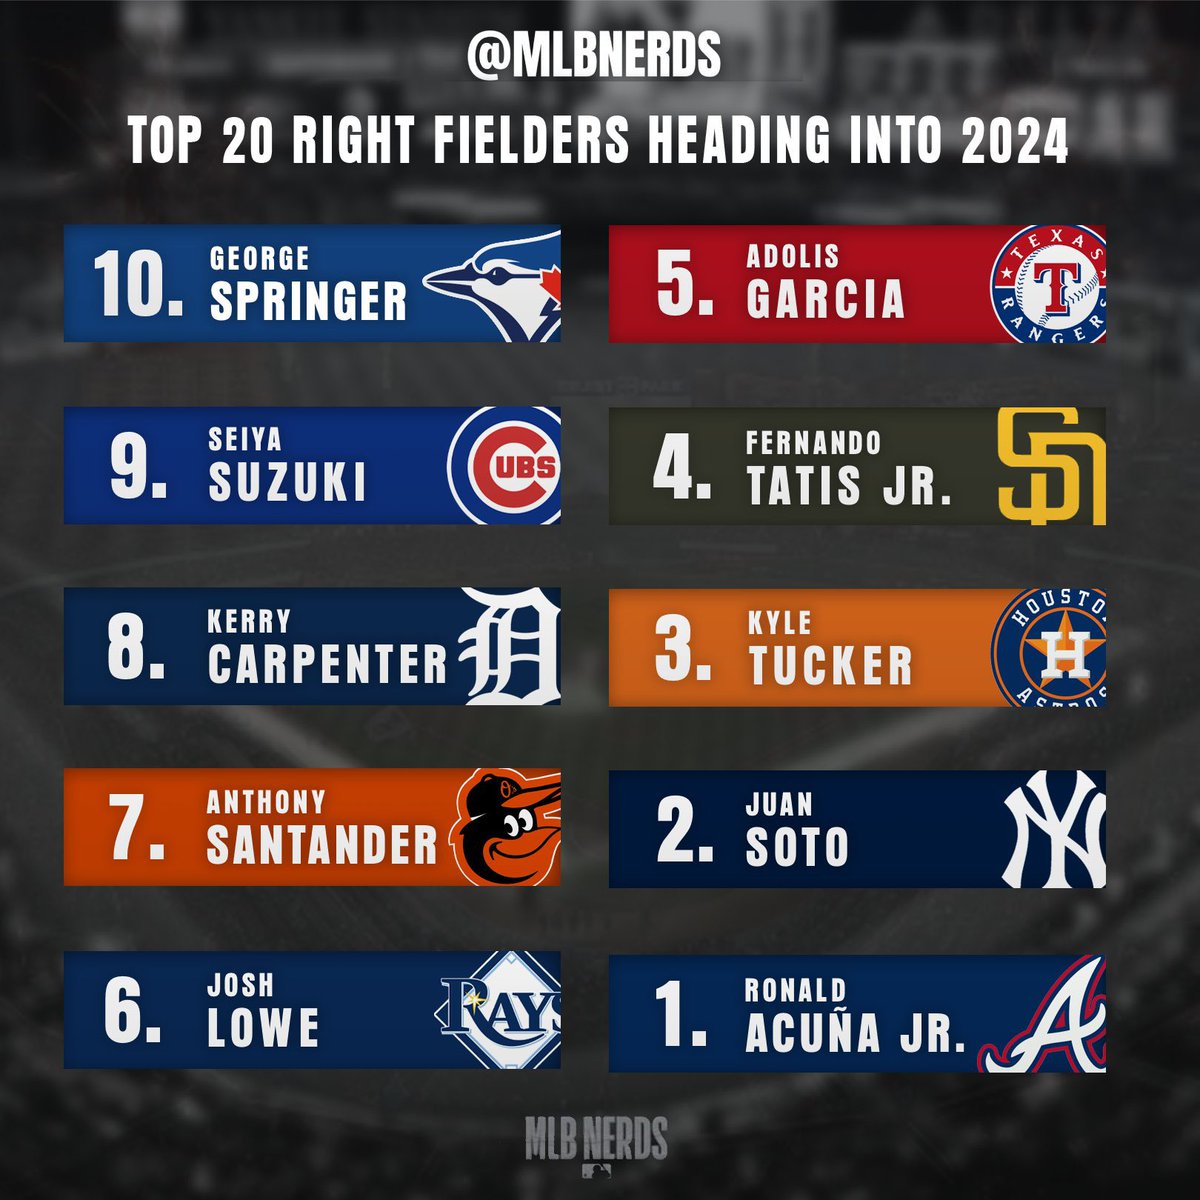 Top 10 Right Fielders for the 2024 season.